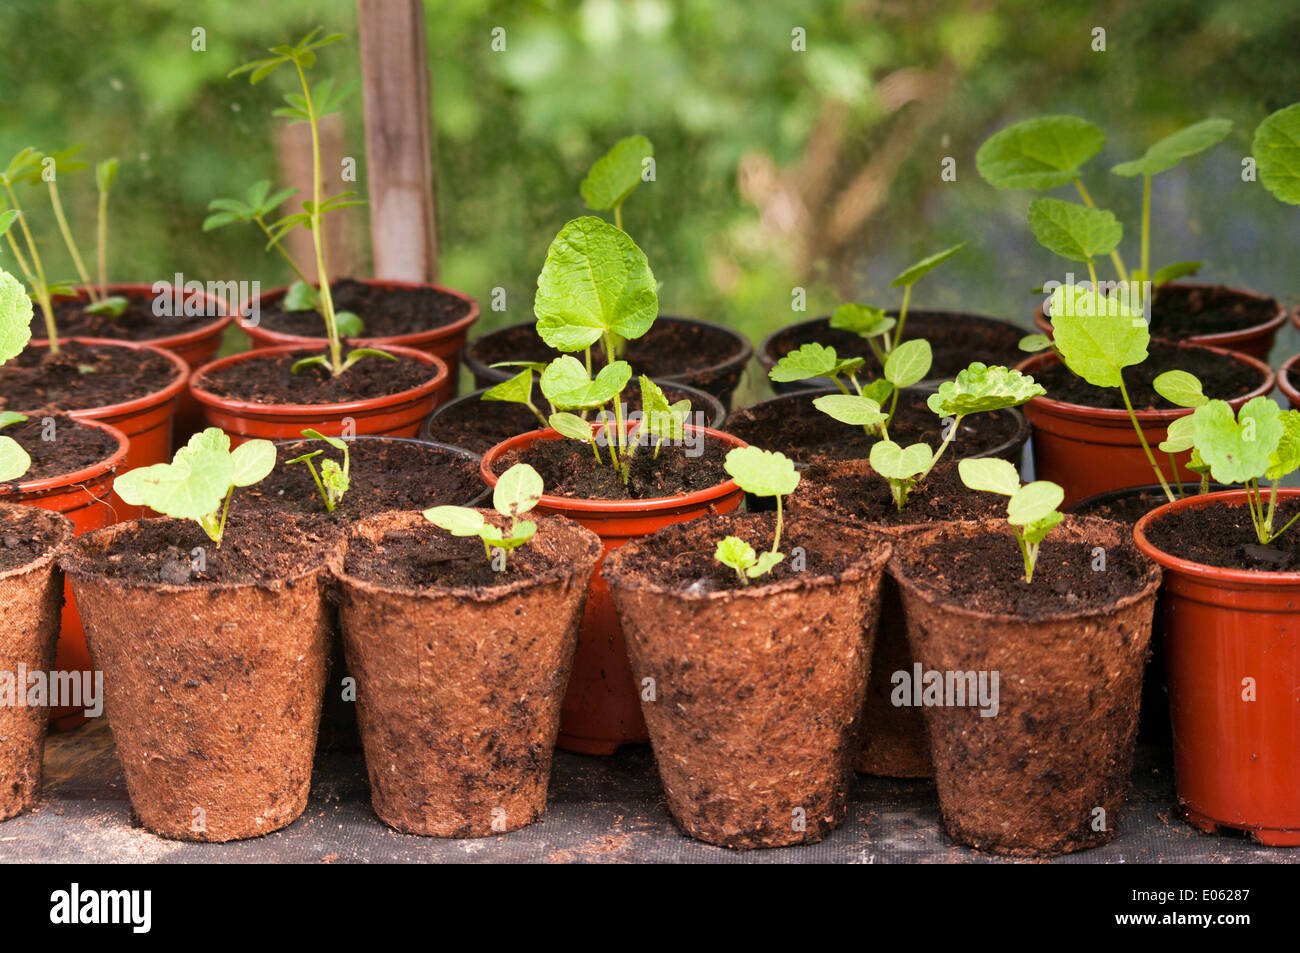 Seedlings Plantlets Growing In Small Flowerpots In A Greenhouse Stock Photo